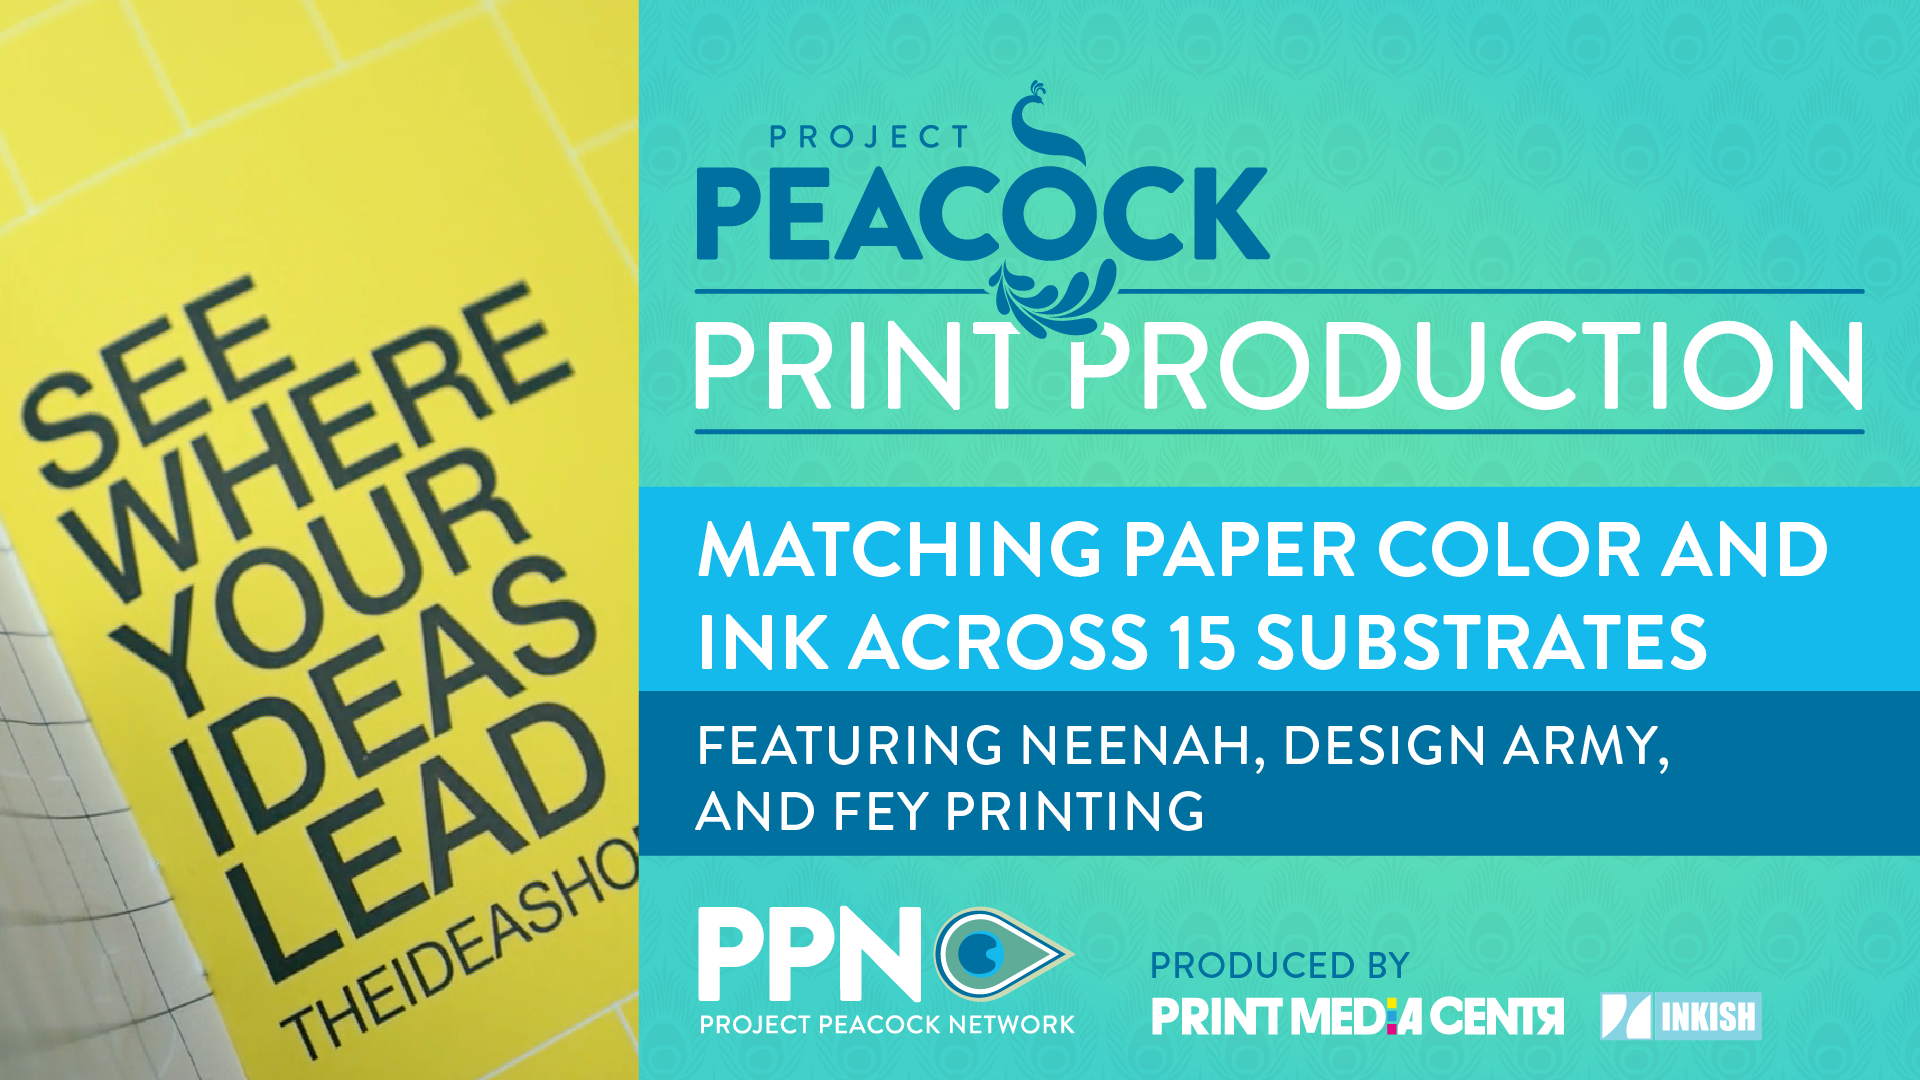 Project Peacock Print Production: The Idea Shop Launch Kit